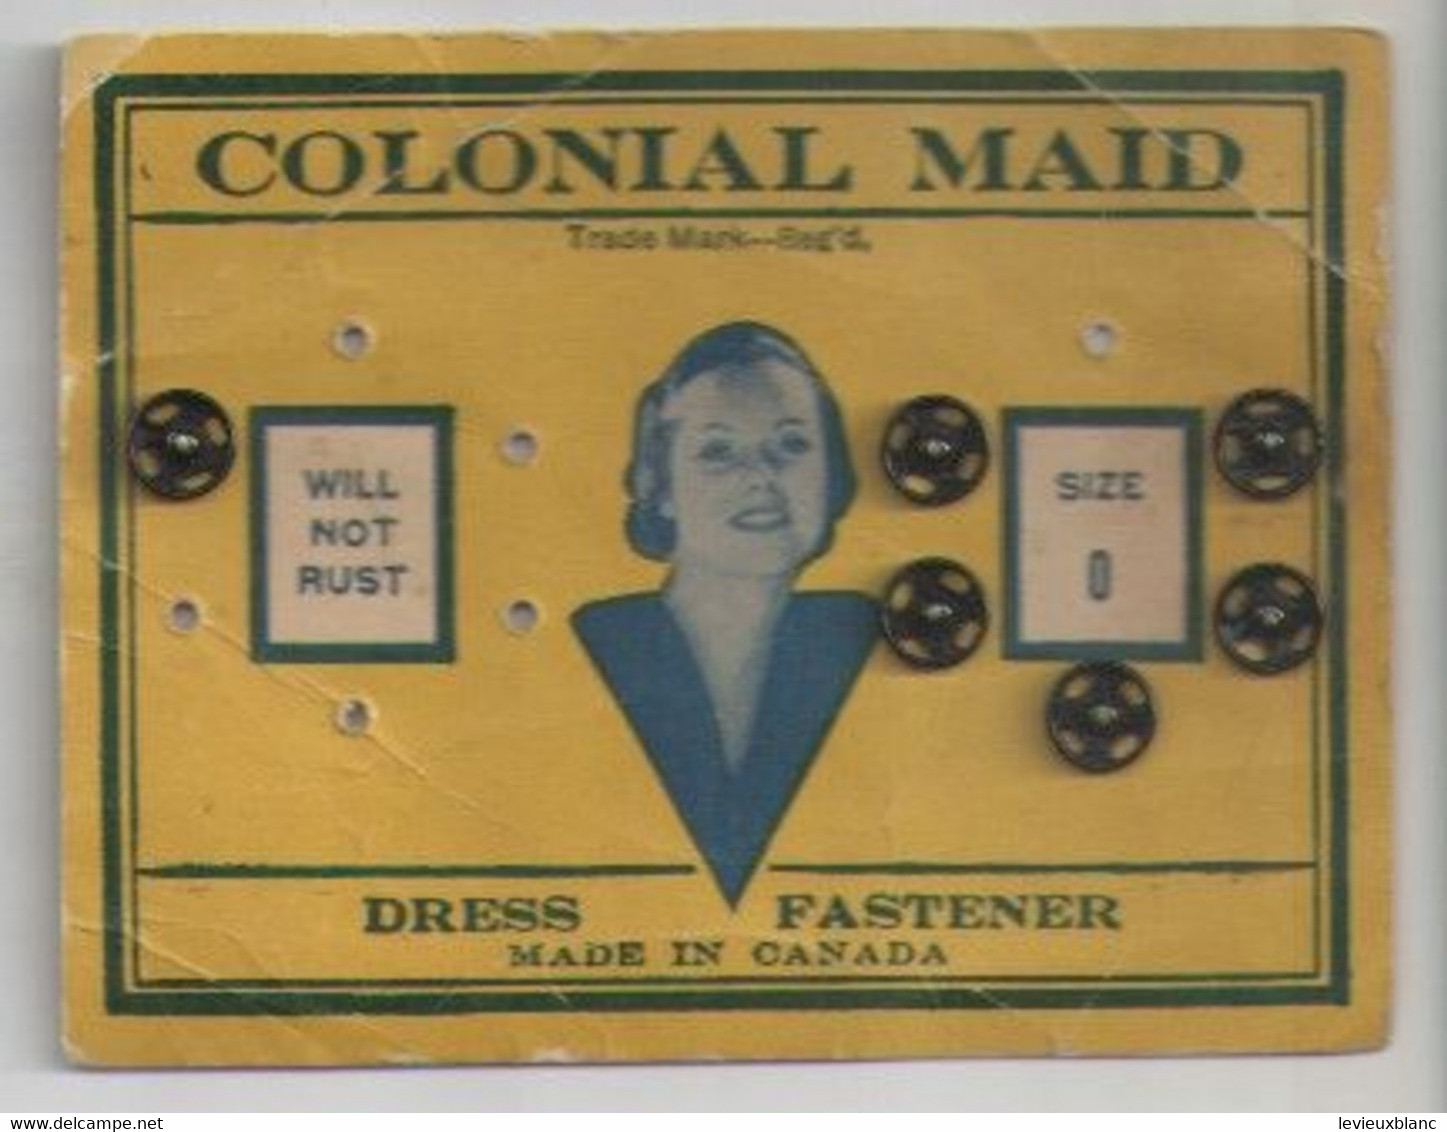 Mercerie / Boutons Pressions/Colonial Maid /Dress Fastener/Made In Canada /Carton De Présentation/Vers 1950-60     MER87 - Botones